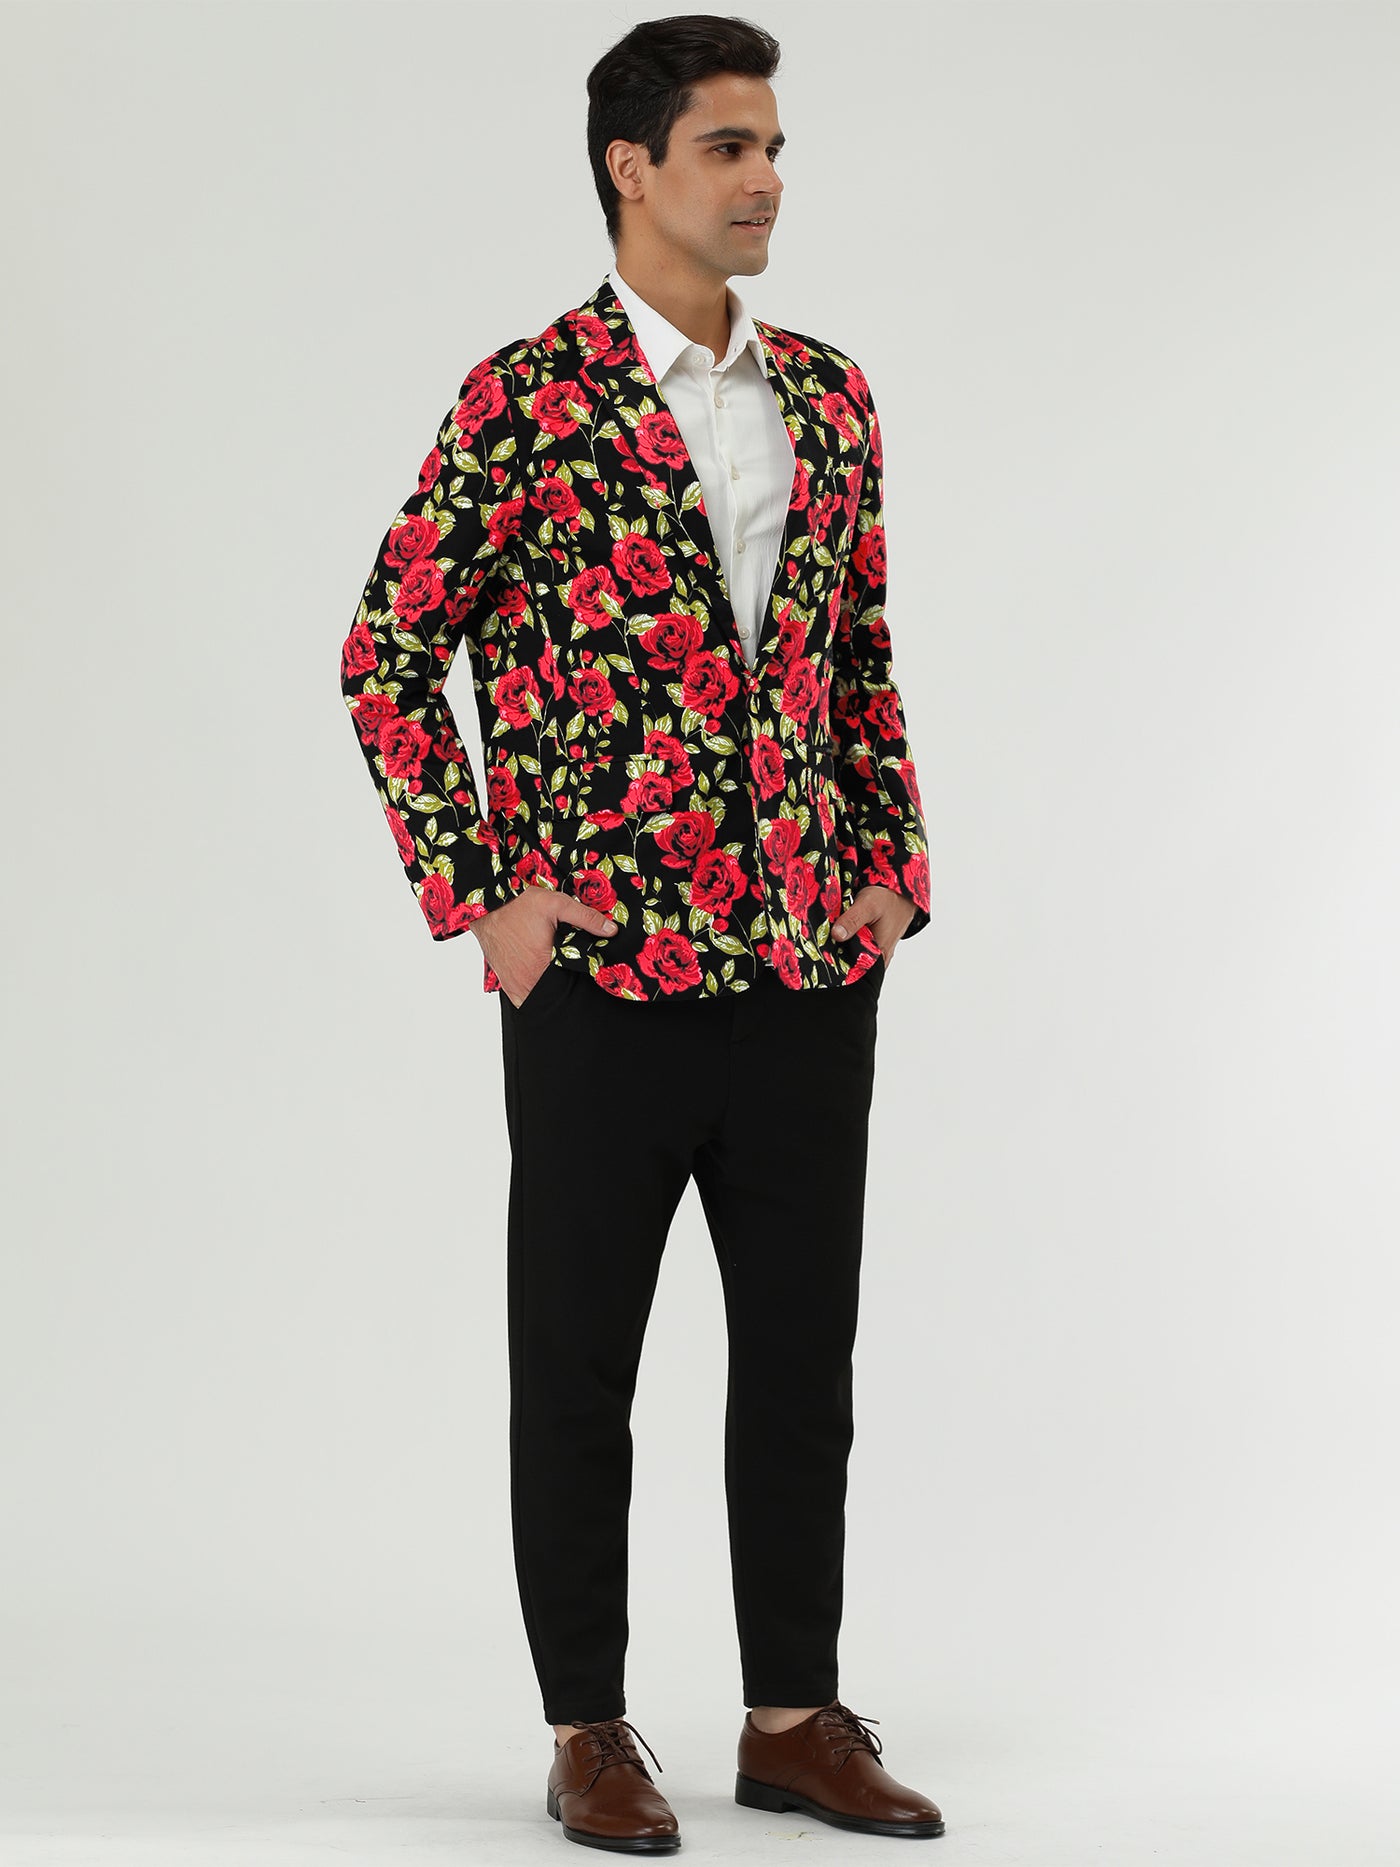 Bublédon Lightweight Floral Print One Button Prom Suit Blazer